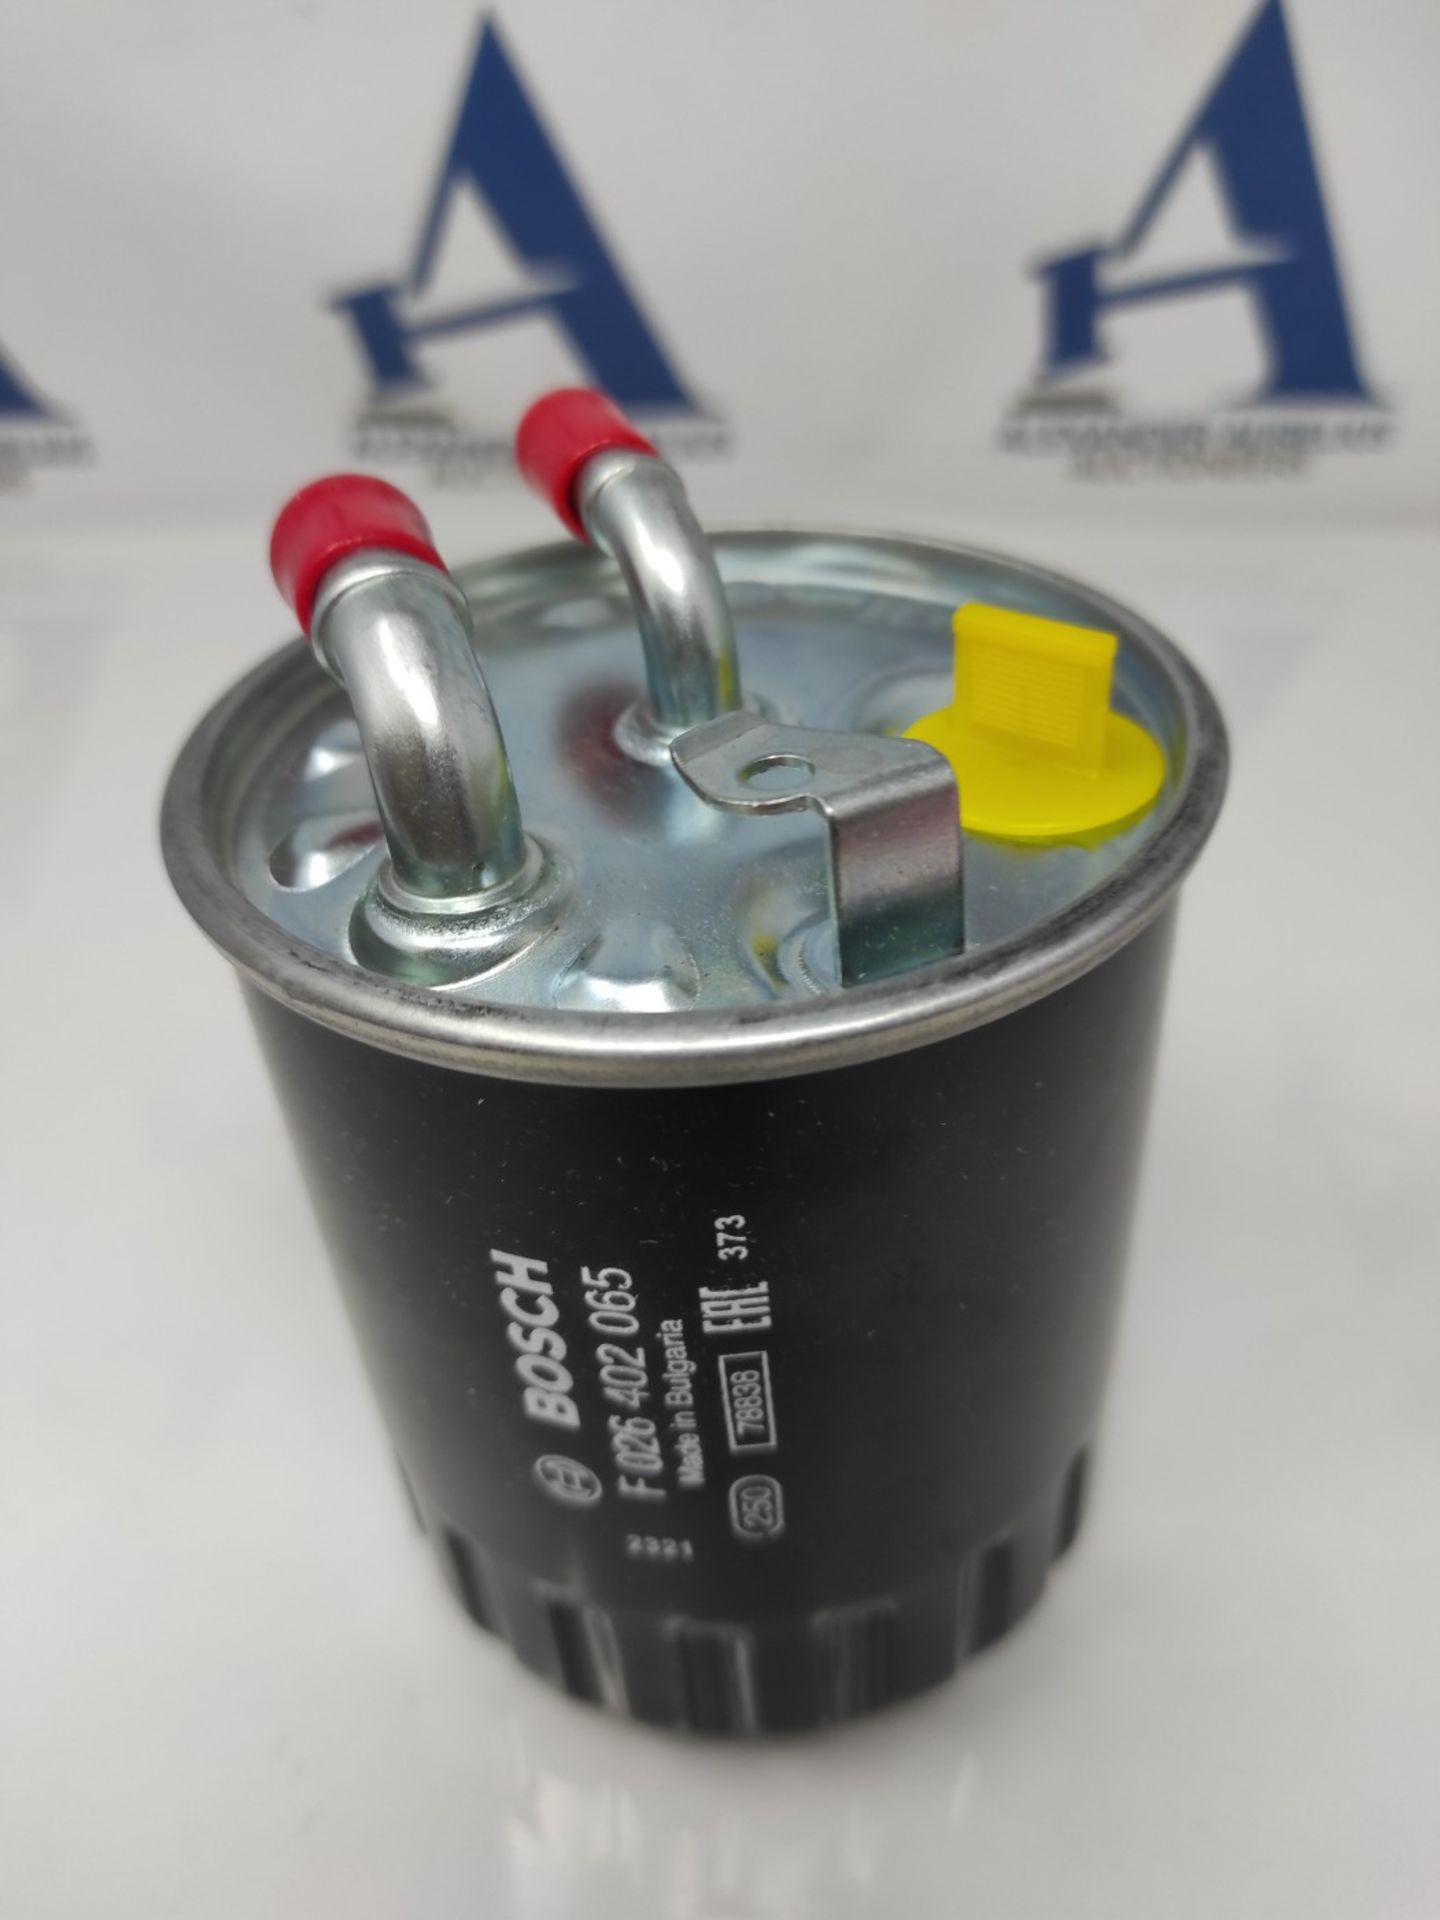 Bosch N2065 - Diesel Filter for Cars - Image 2 of 3